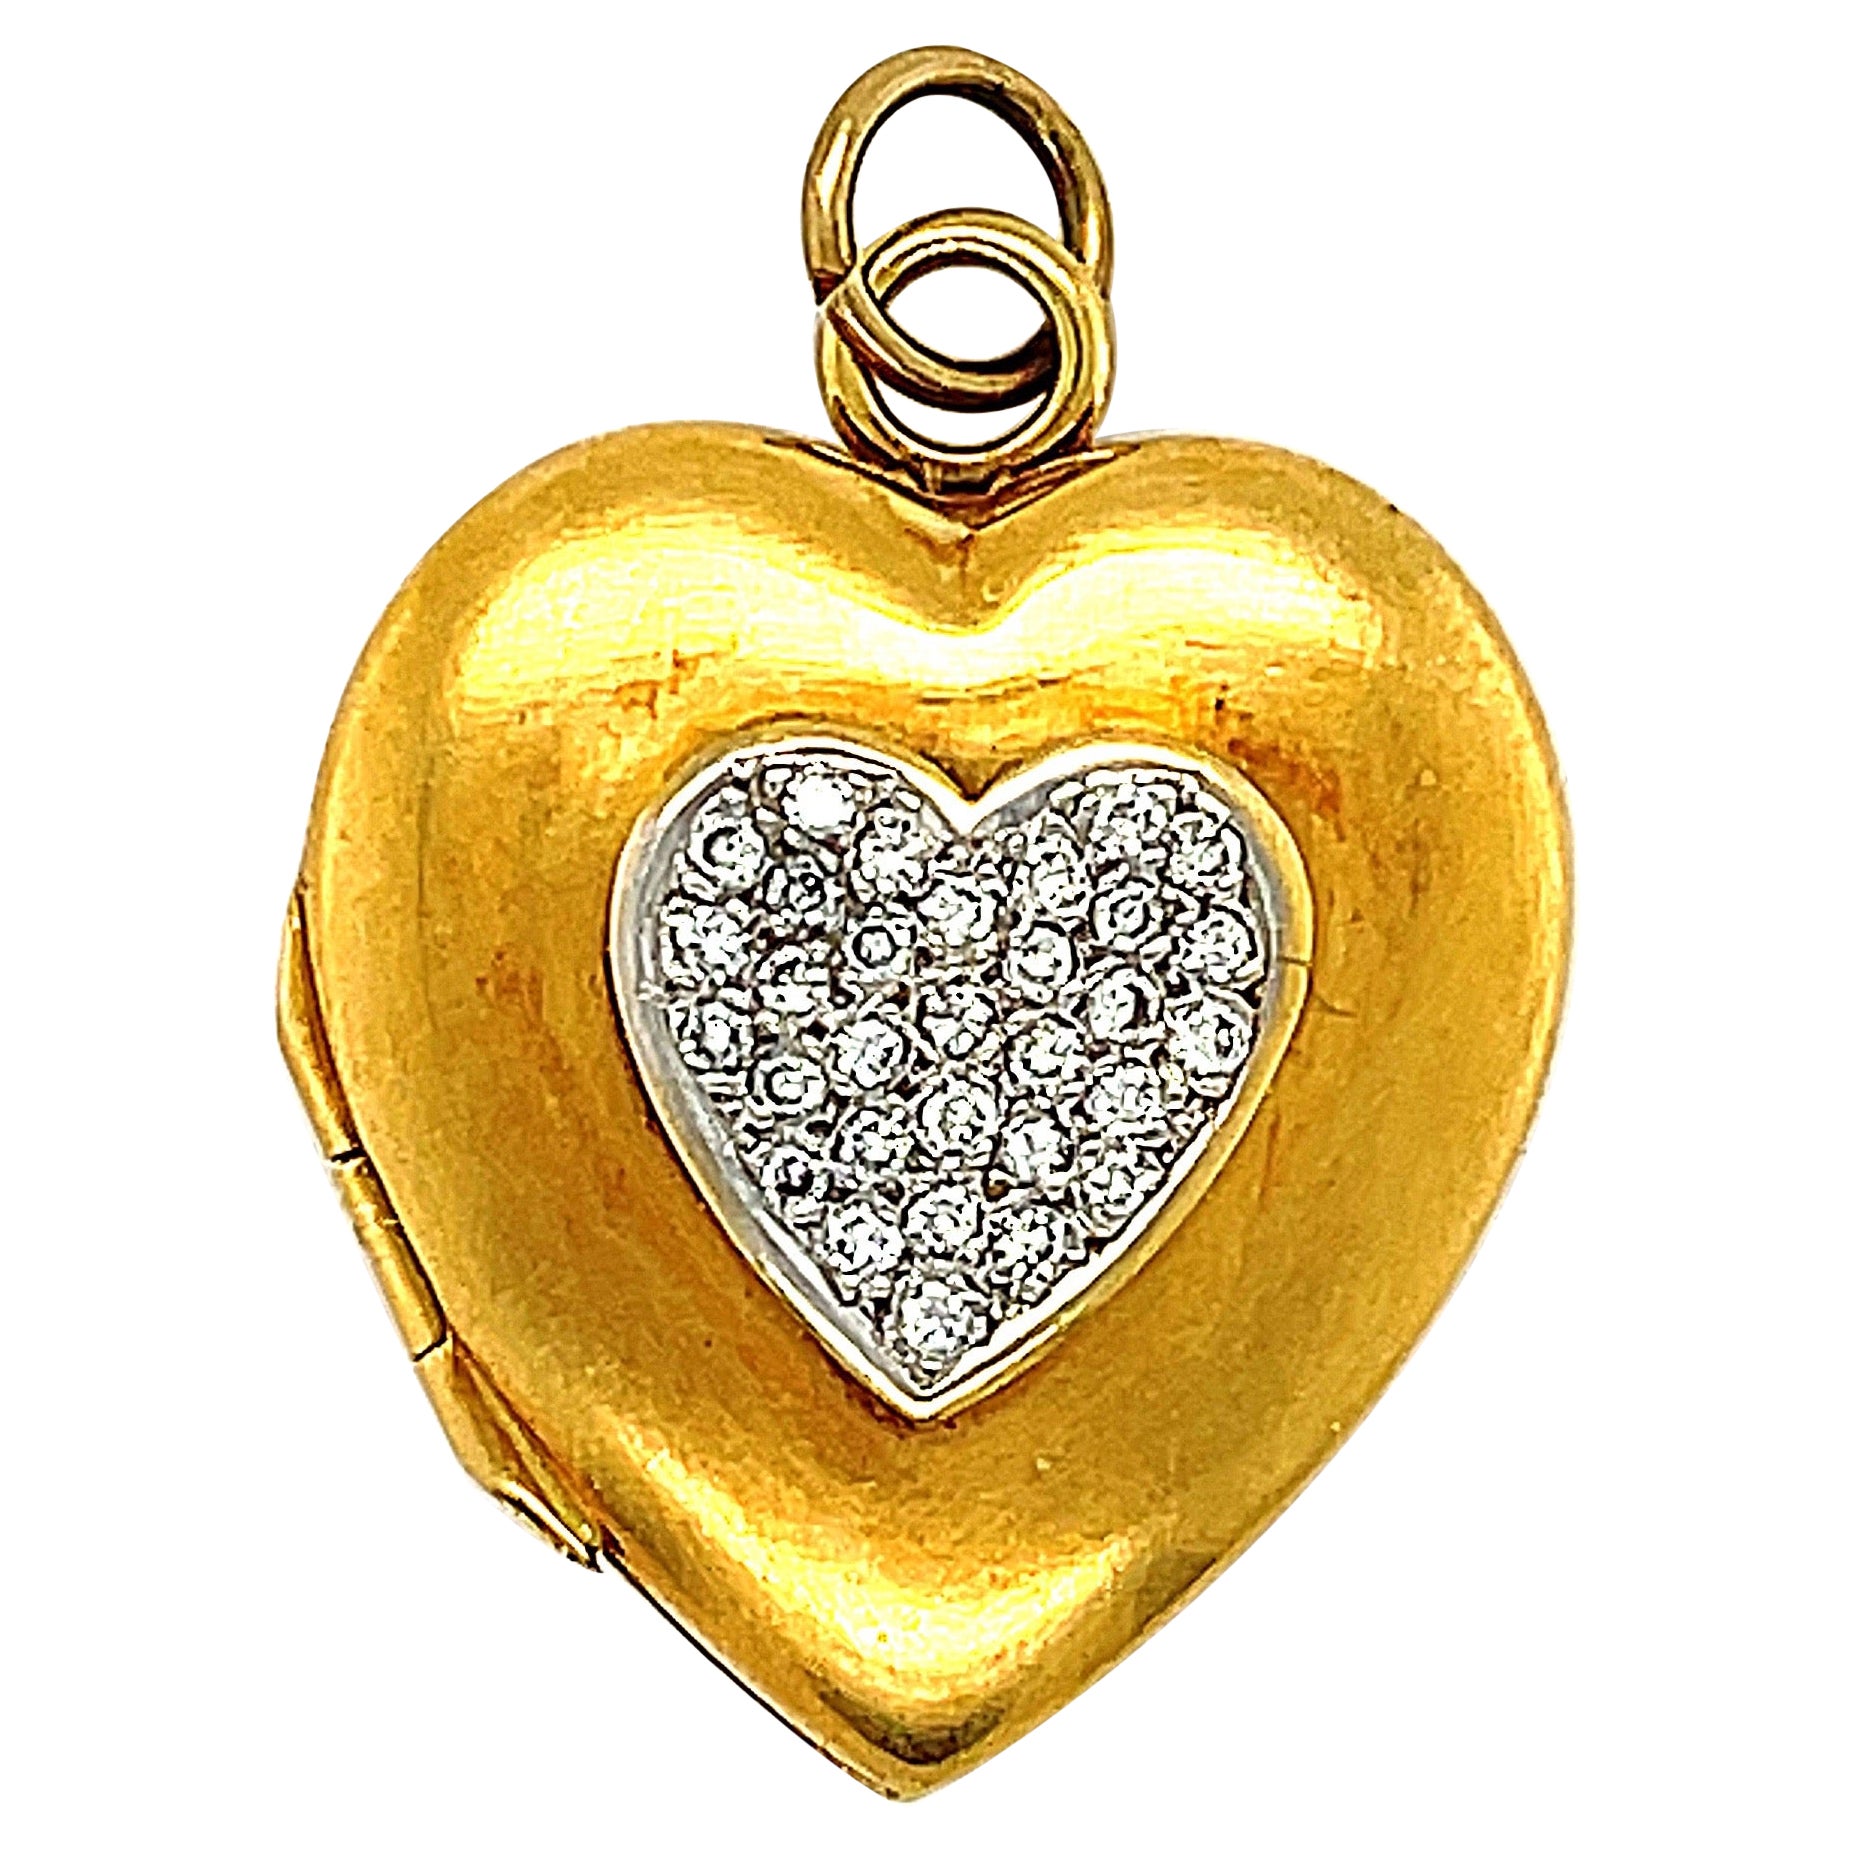 Vintage 18 Karat Yellow English Gold Diamond Heart Locket